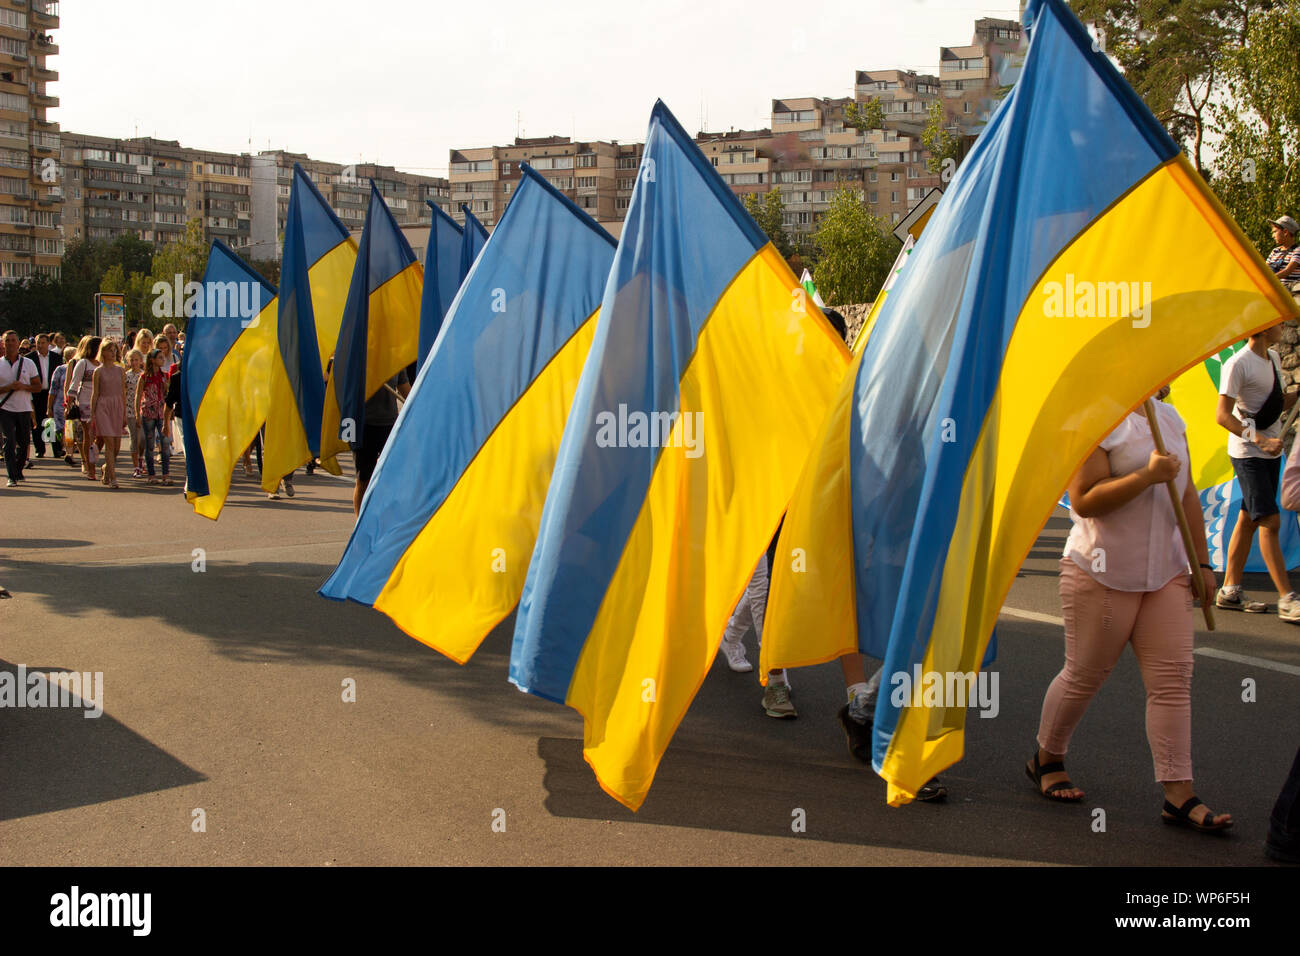 Stadt Tag Festival in Ukrainka, Obukhov Bezirk, Kiew Region. Land Ukraine. Datum: Shooting am 07 September (2019). Stockfoto